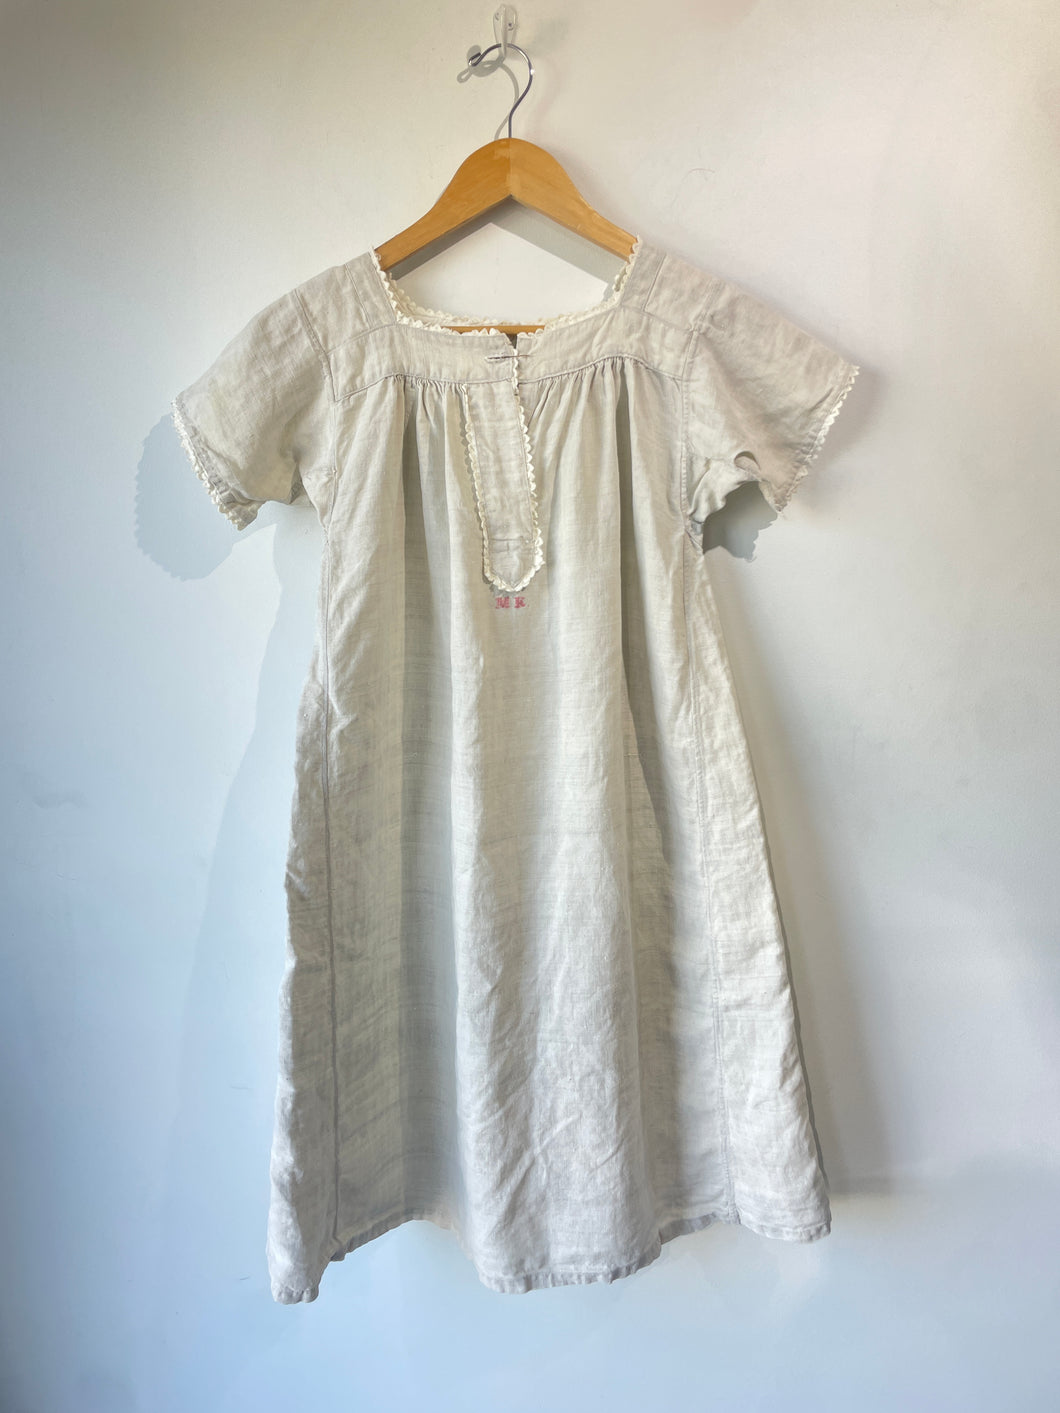 Antique Victorian Nightgown Dress M.K. Initials